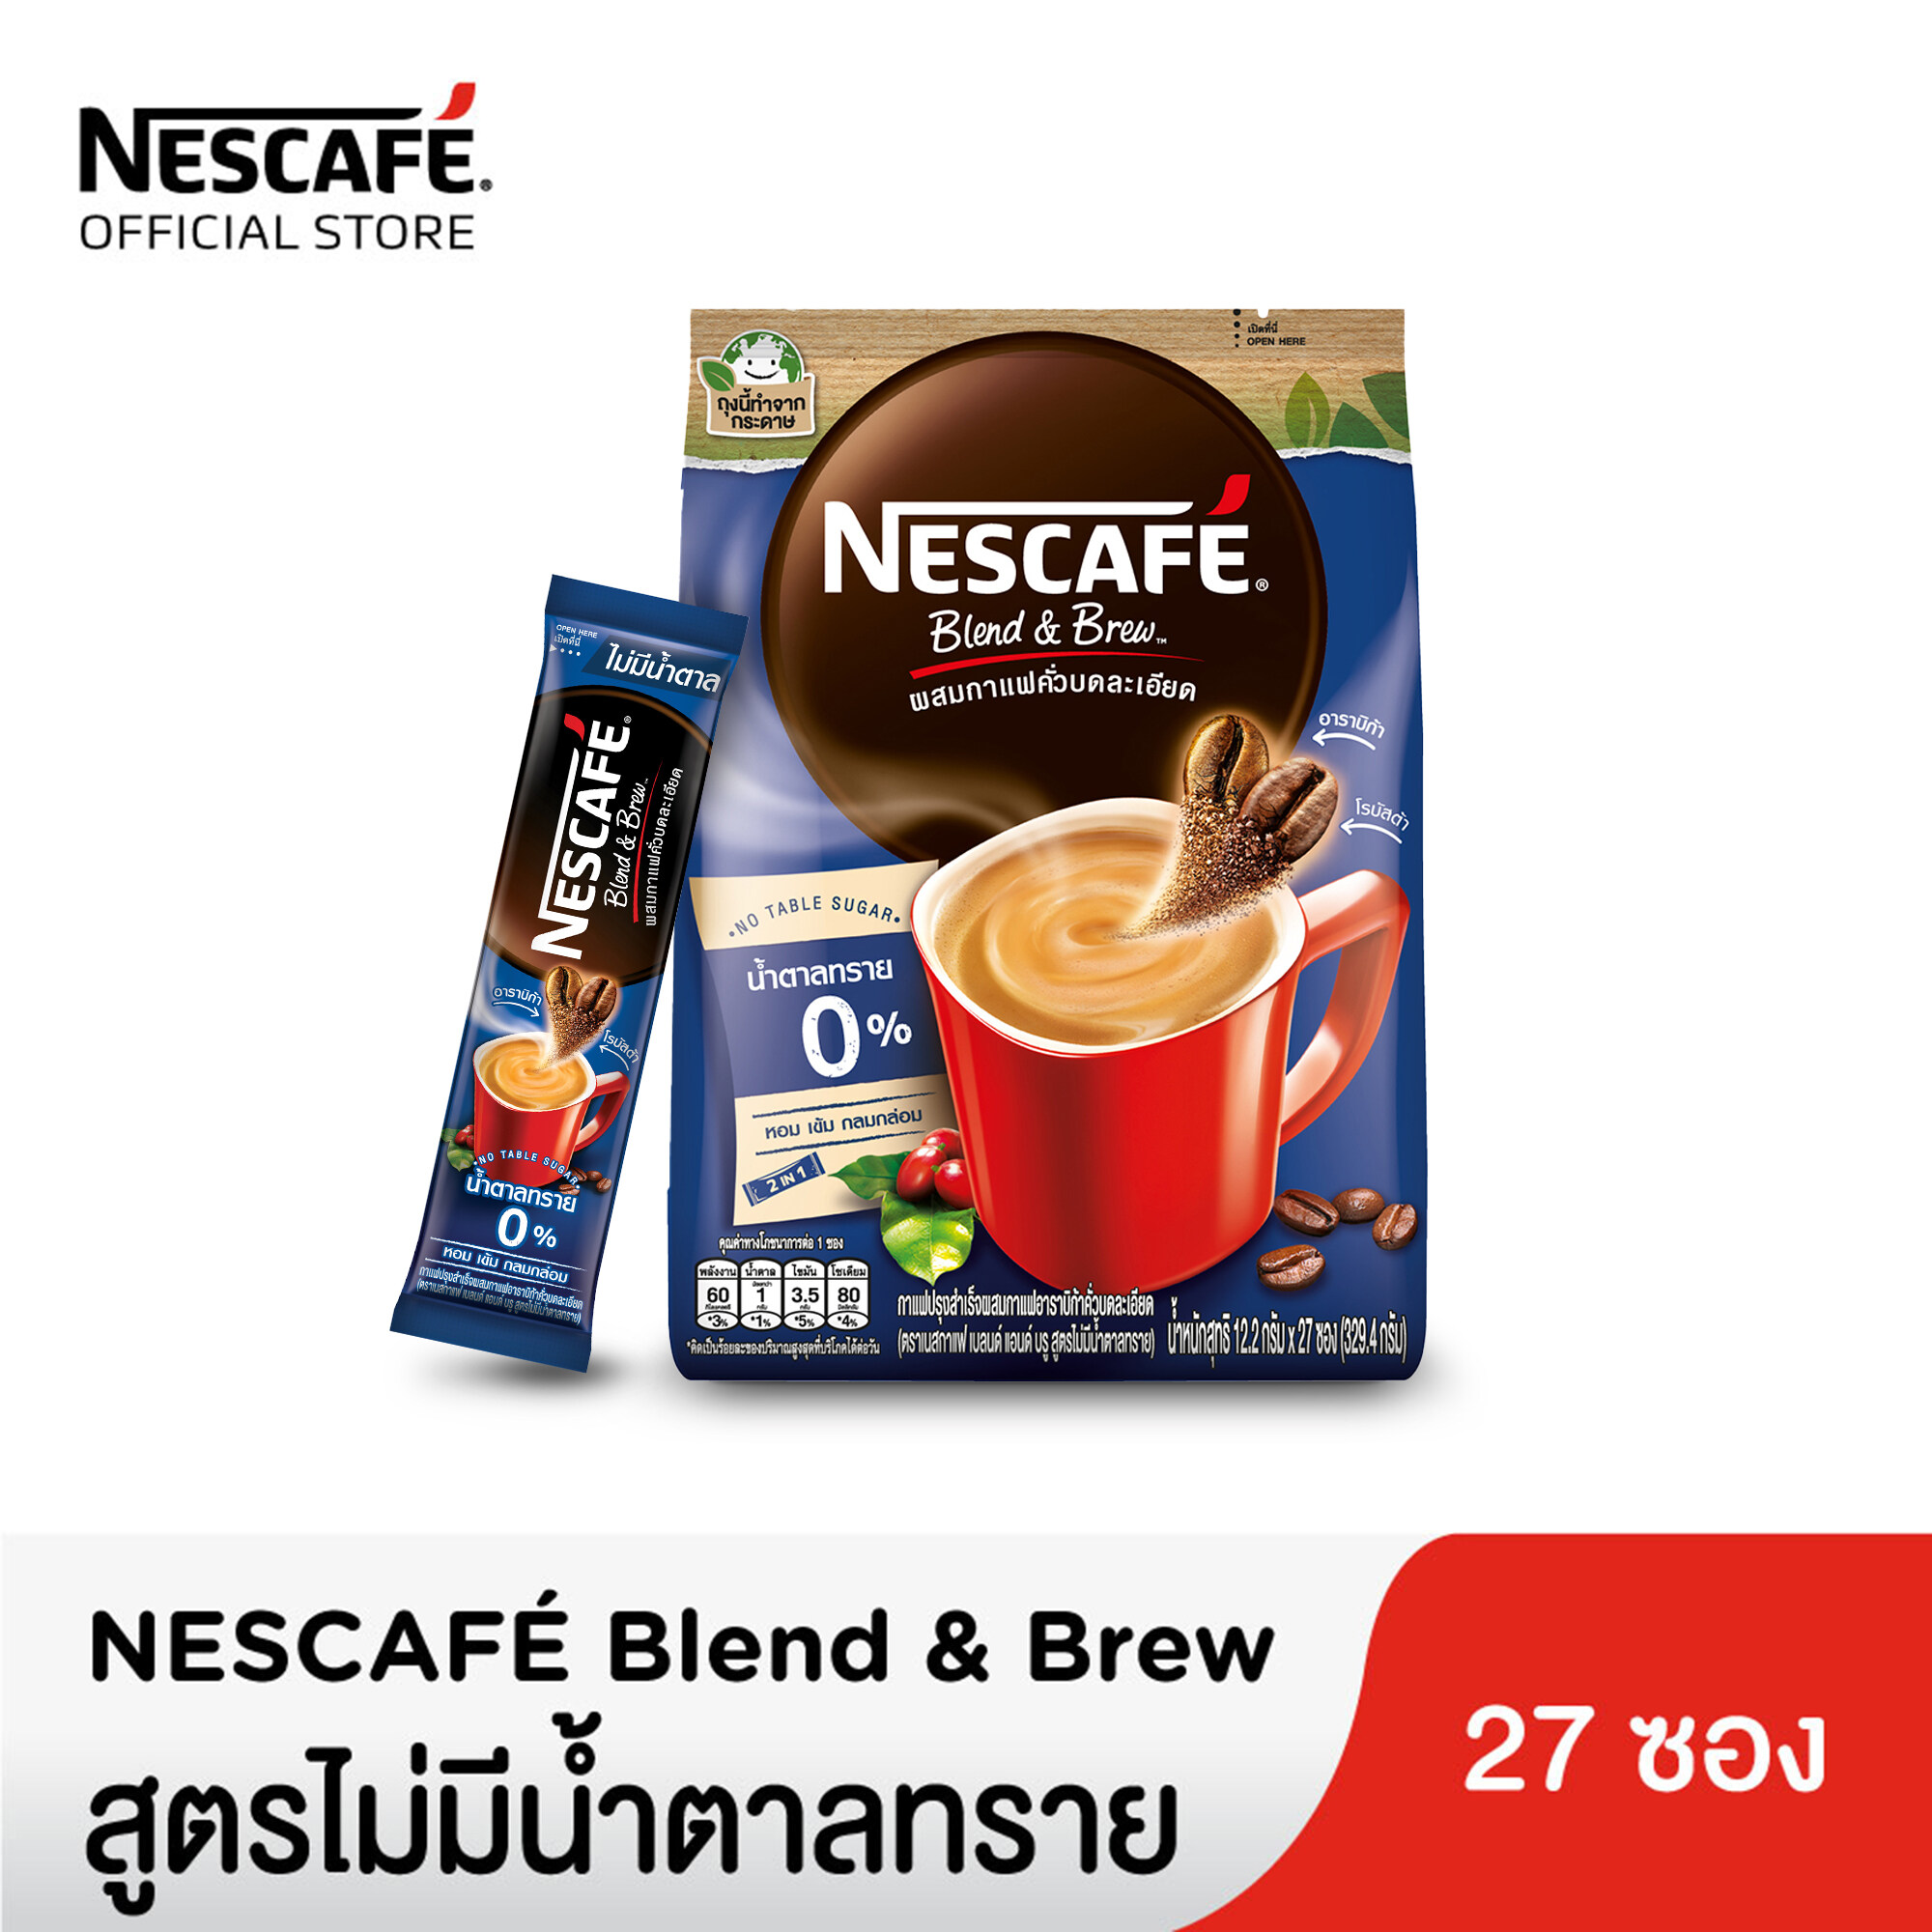 NESCAFÉ Blend & Brew Instant Coffee 3in1 เนสกาแฟ เบลนด์ แอนด์ บรู กาแฟปรุงสำเร็จ 3อิน1 แบบถุง 27 ซอง [ NESCAFE ]